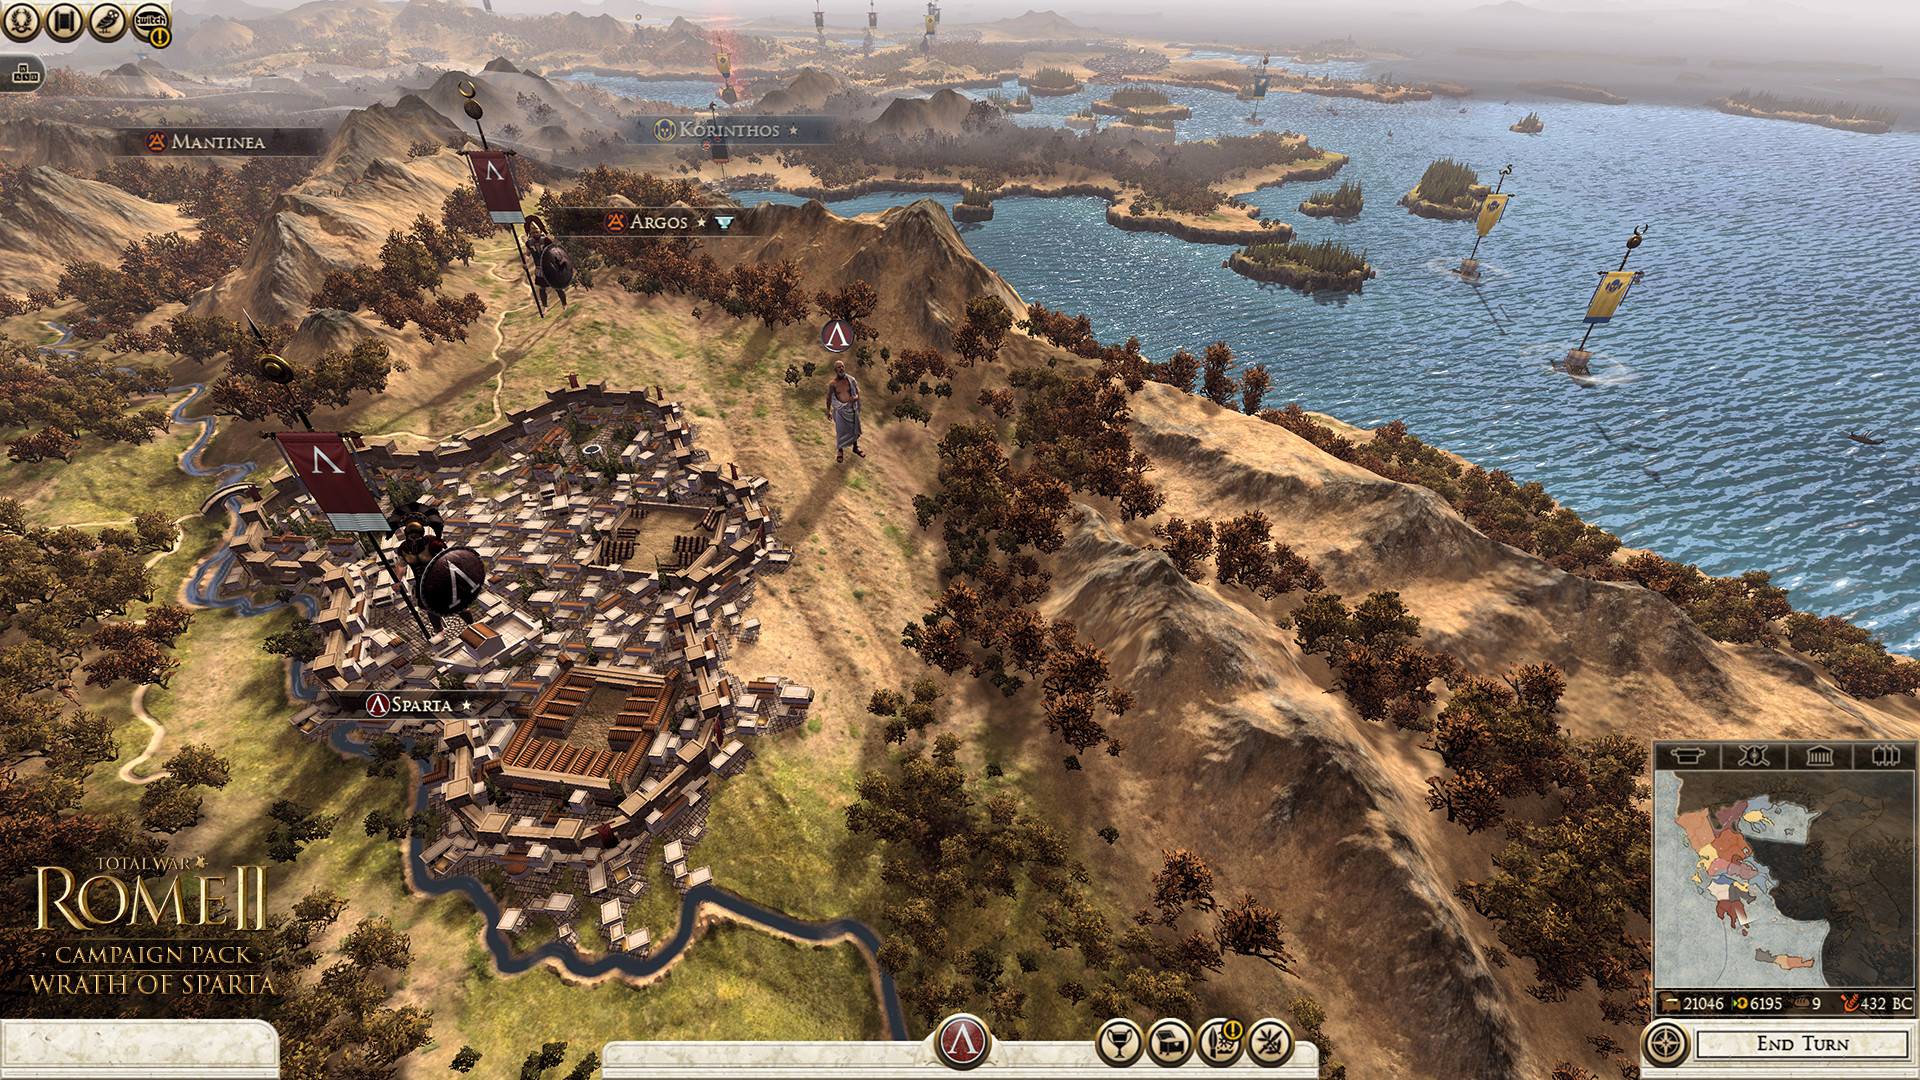 Total War: ROME II - Wrath of Sparta Campaign Pack Featured Screenshot #1